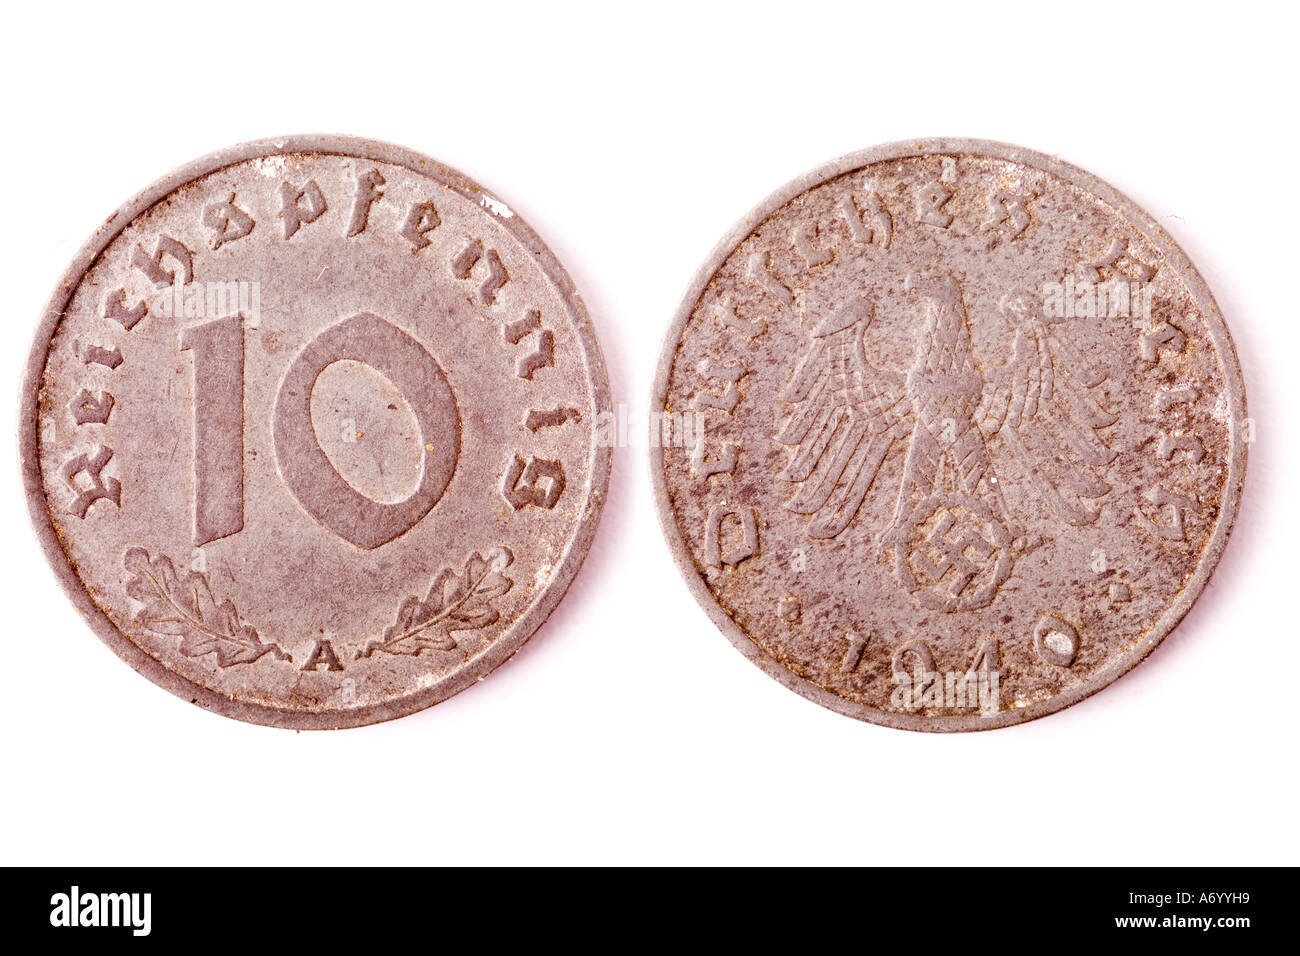 10 pfennig (1940 Stock Photo - Alamy